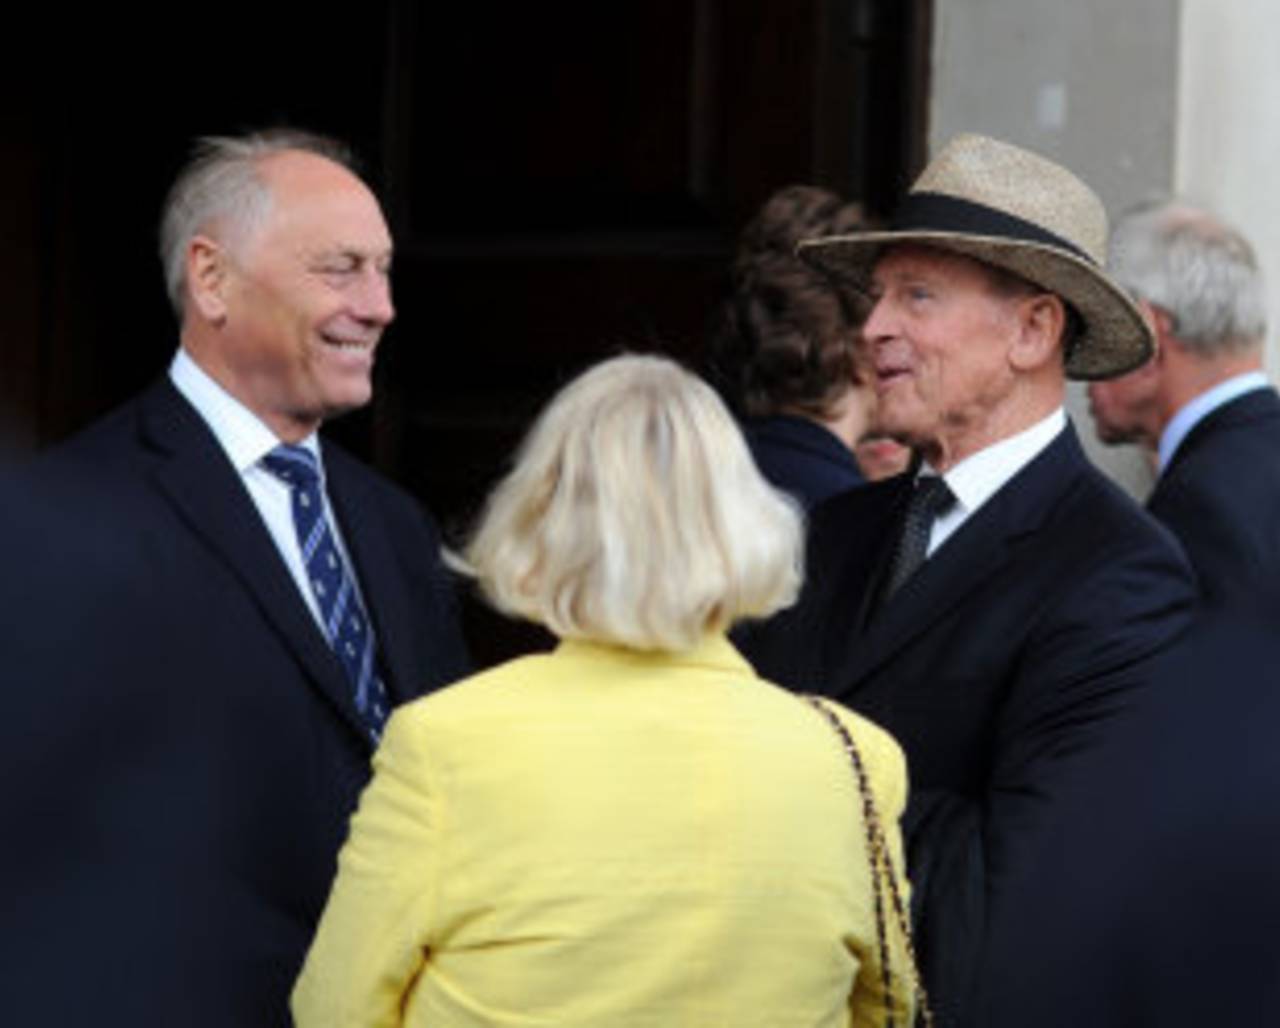 Colin Graves and Geoffrey Boycott attend Tony Greig's memorial service, Trafalgar Square, London, June 24, 2013